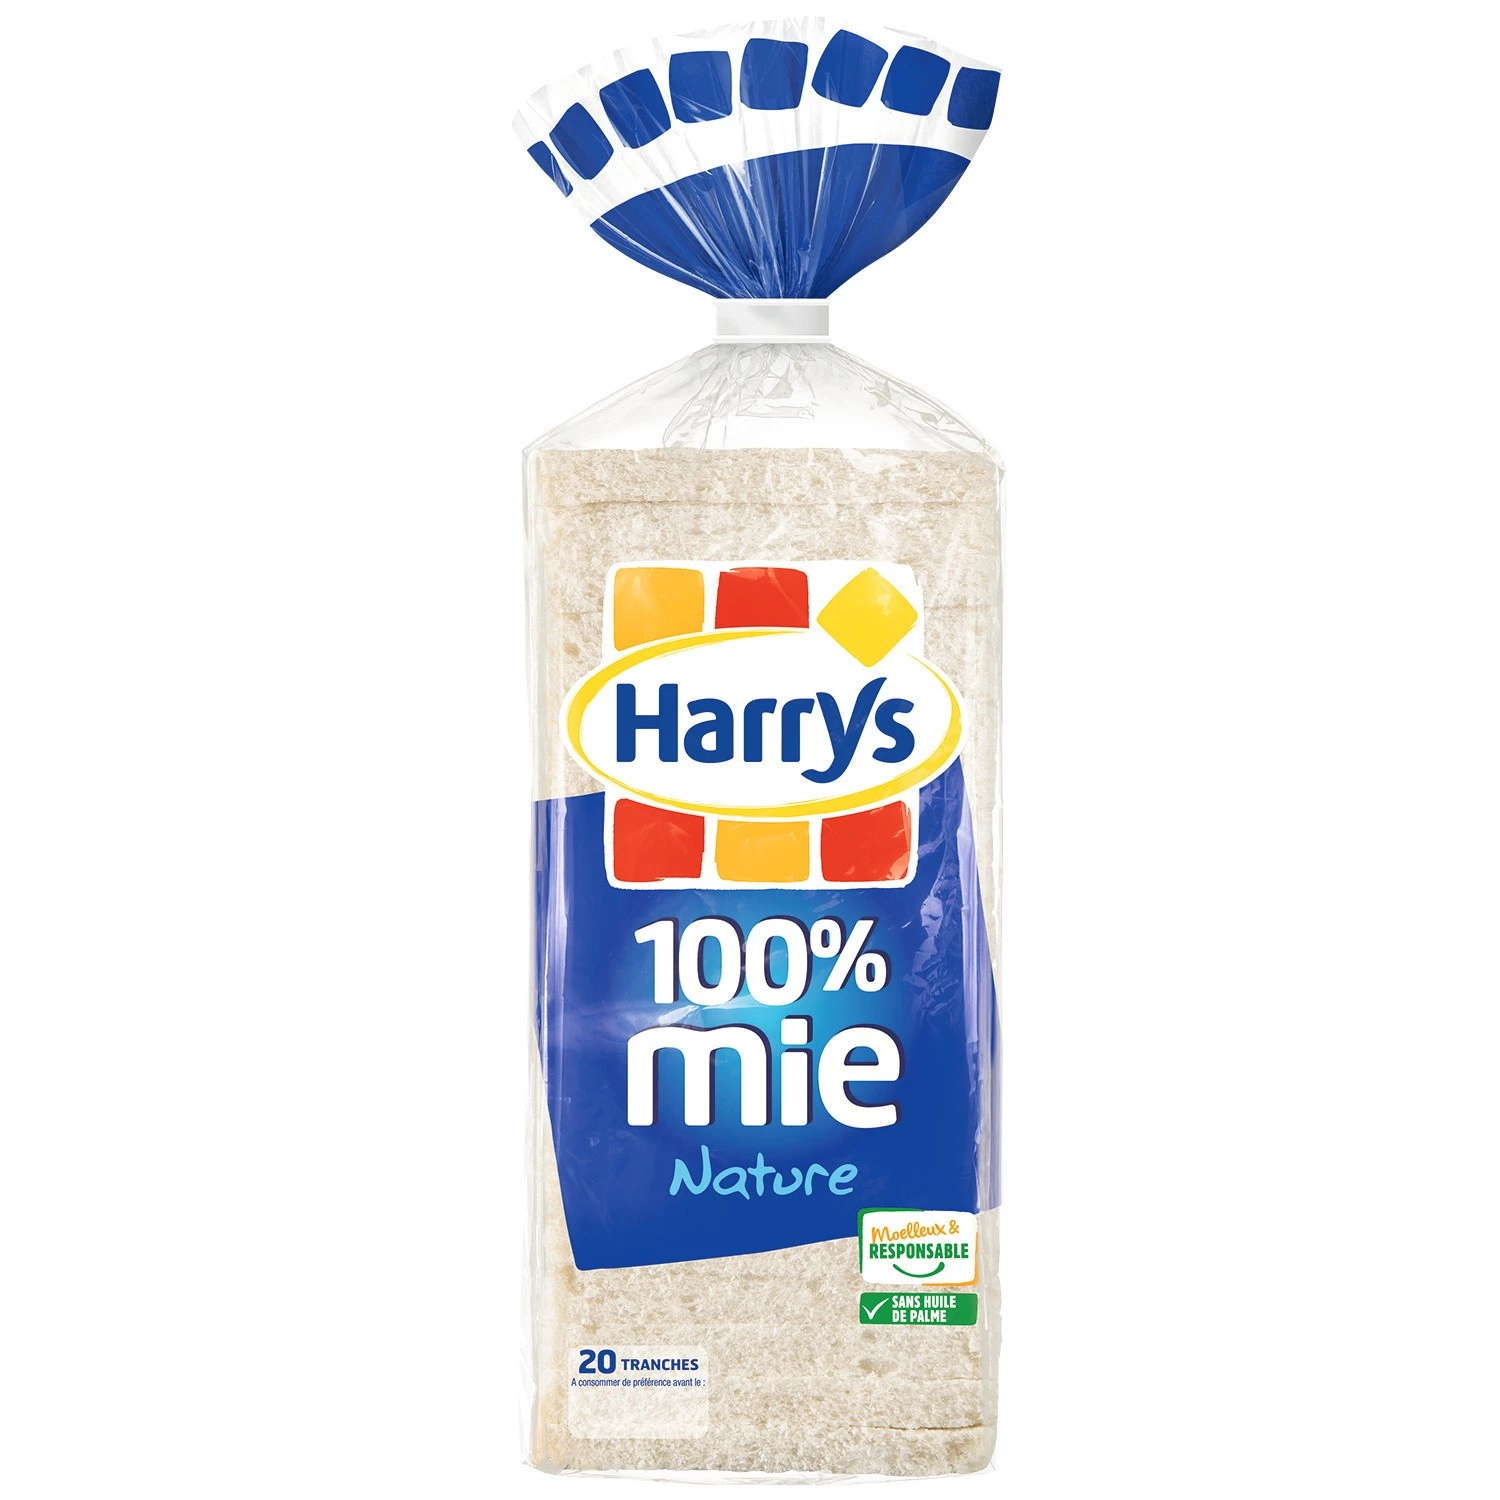 Einfaches Brot ohne Kruste x20 500g - HARRY'S